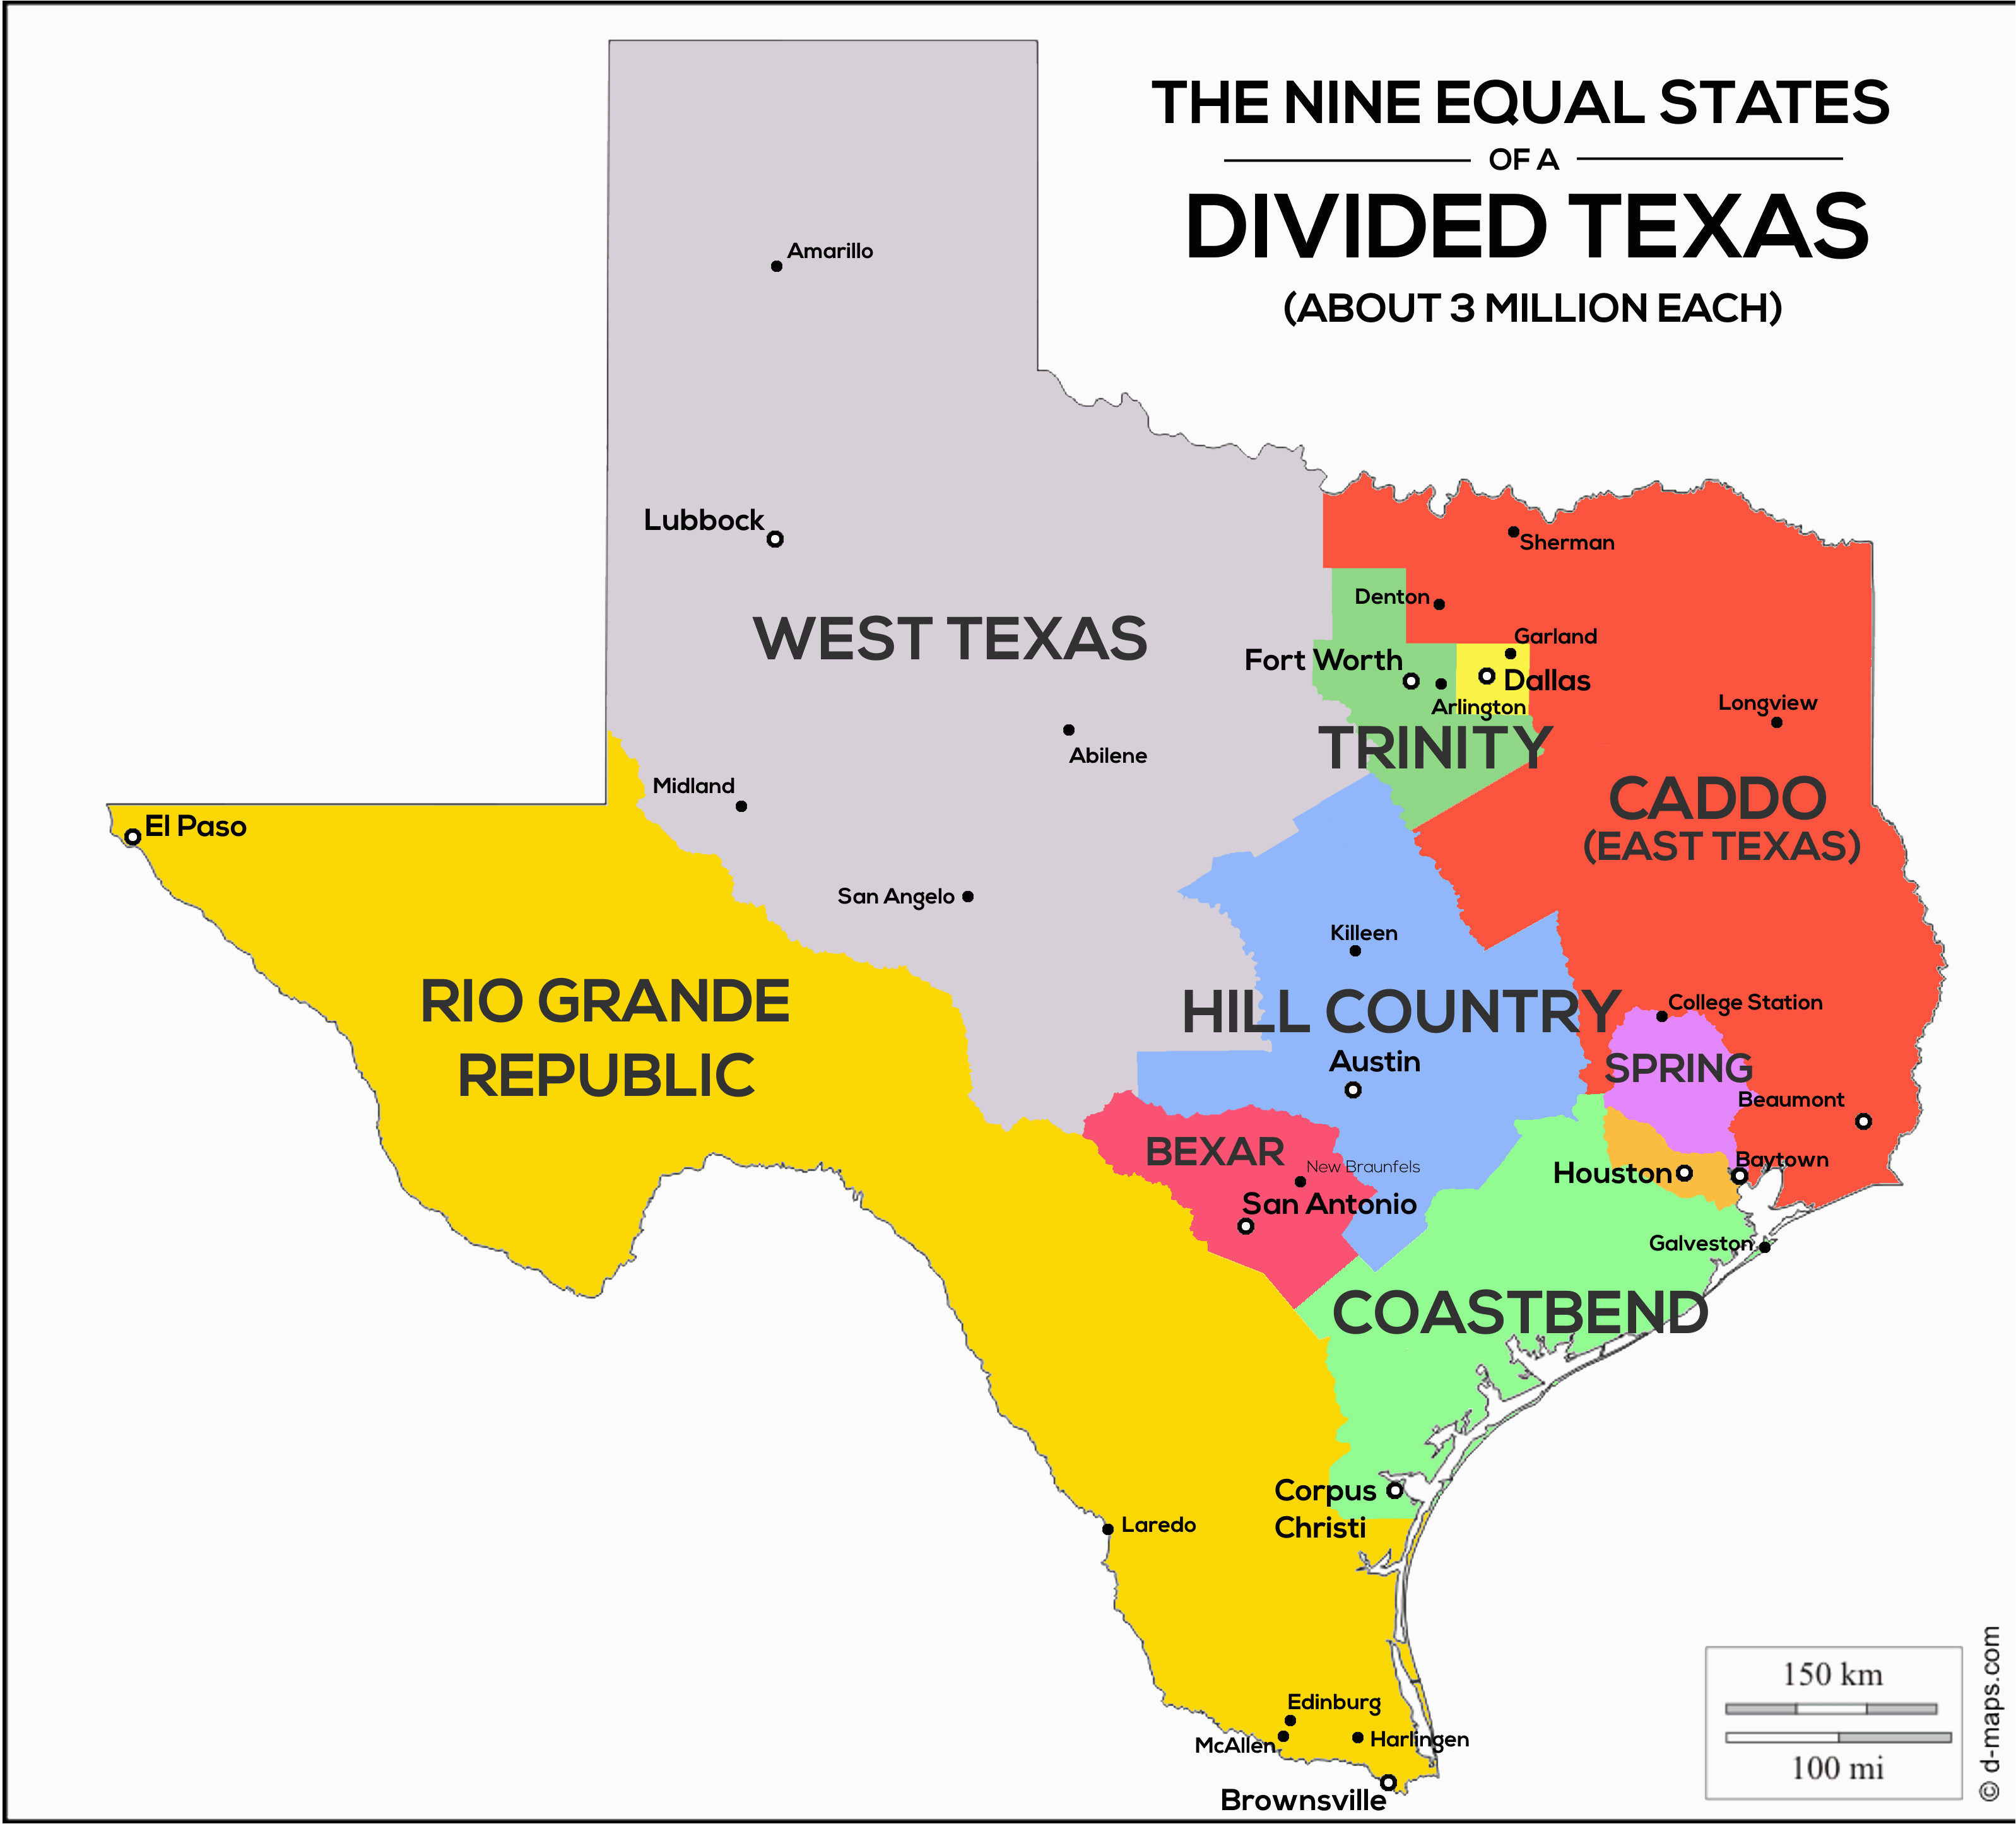 amarillo tx map lovely map texas showing austin map city austin